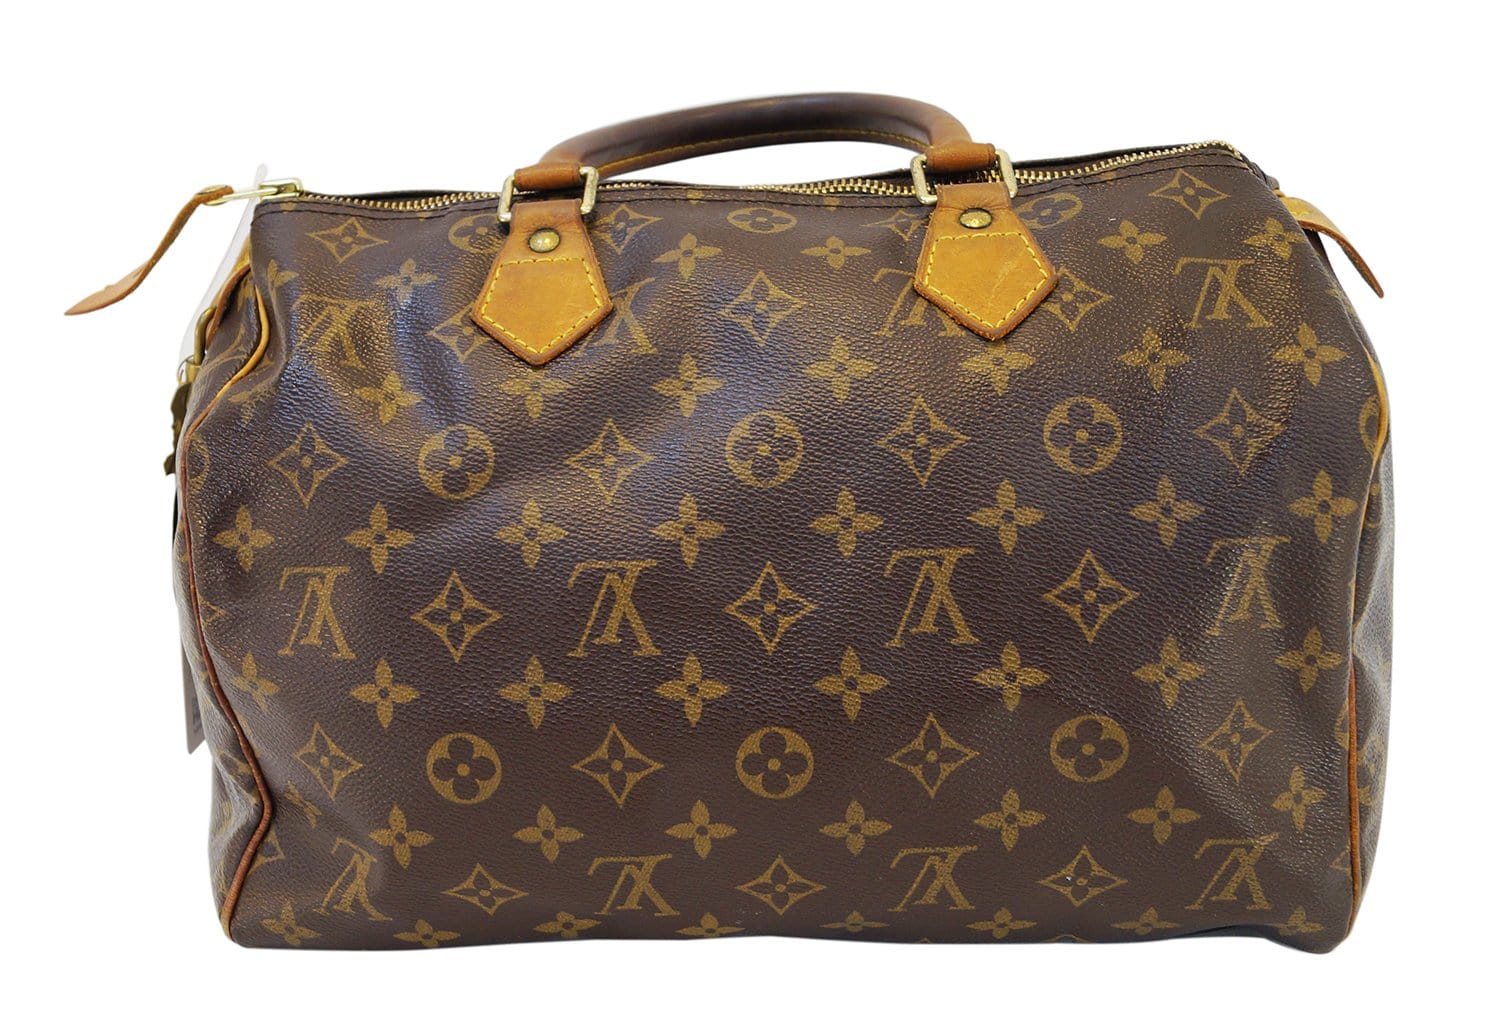 Iconic LV Speedy 30  louis vuitton handbags, louis vuitton bag, fashion